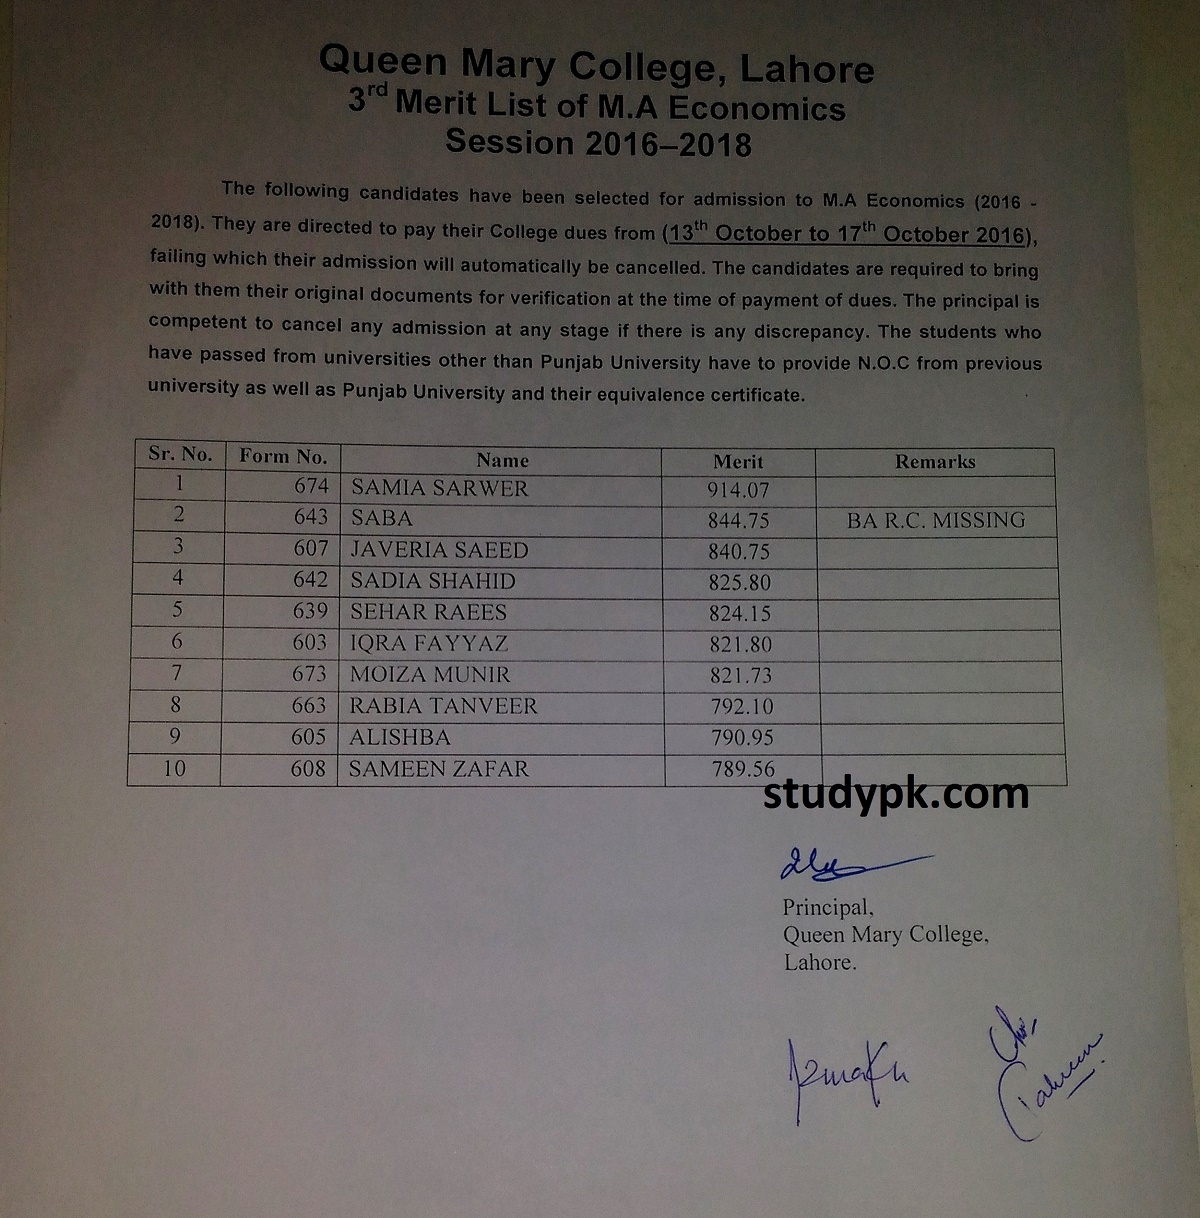 Queen Mary College 3rd Merit List M.A. Economics 2016-2018